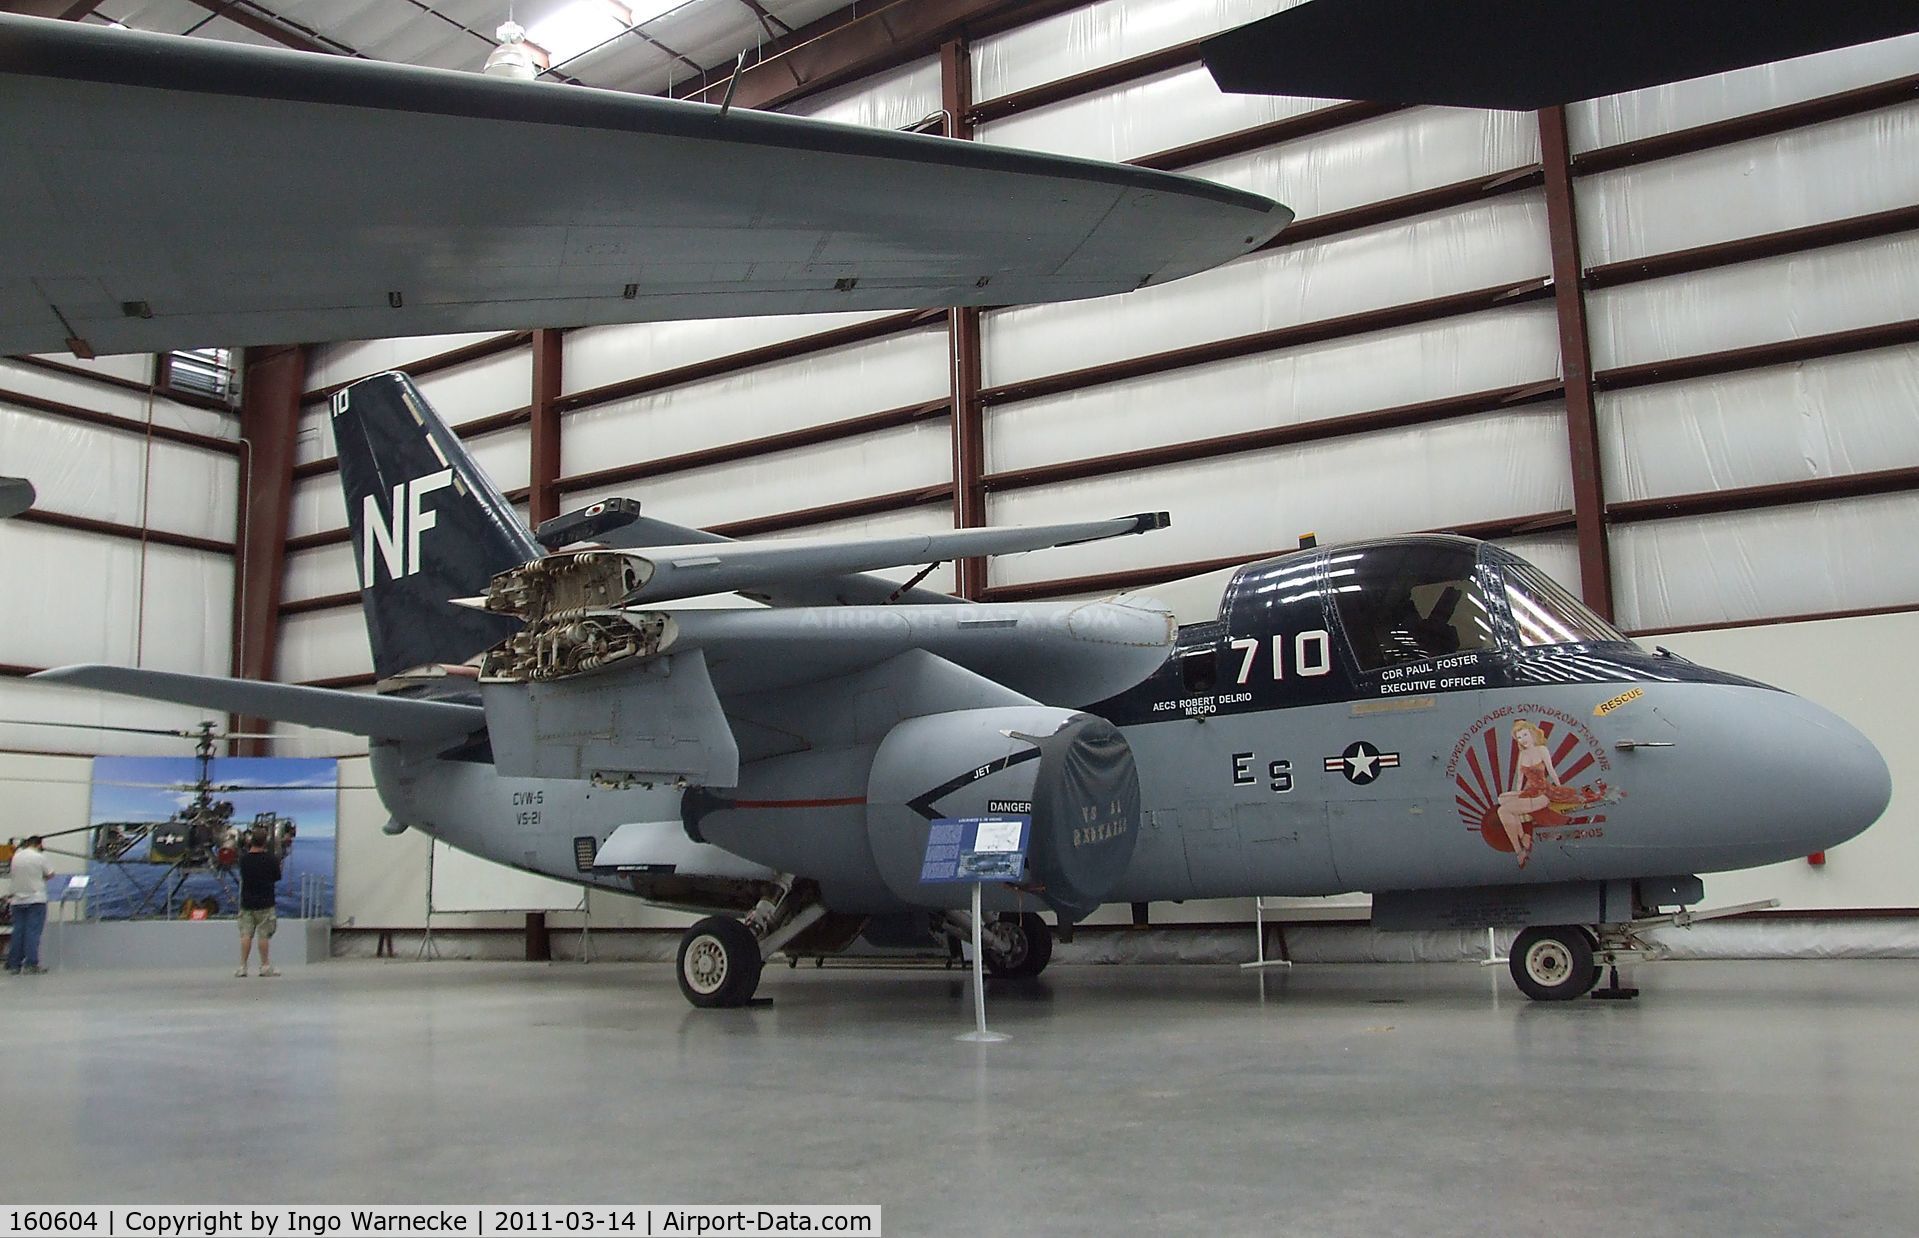 160604, Lockheed S-3B Viking C/N 394A-1184, Lockheed S-3B Viking at the Pima Air & Space Museum, Tucson AZ